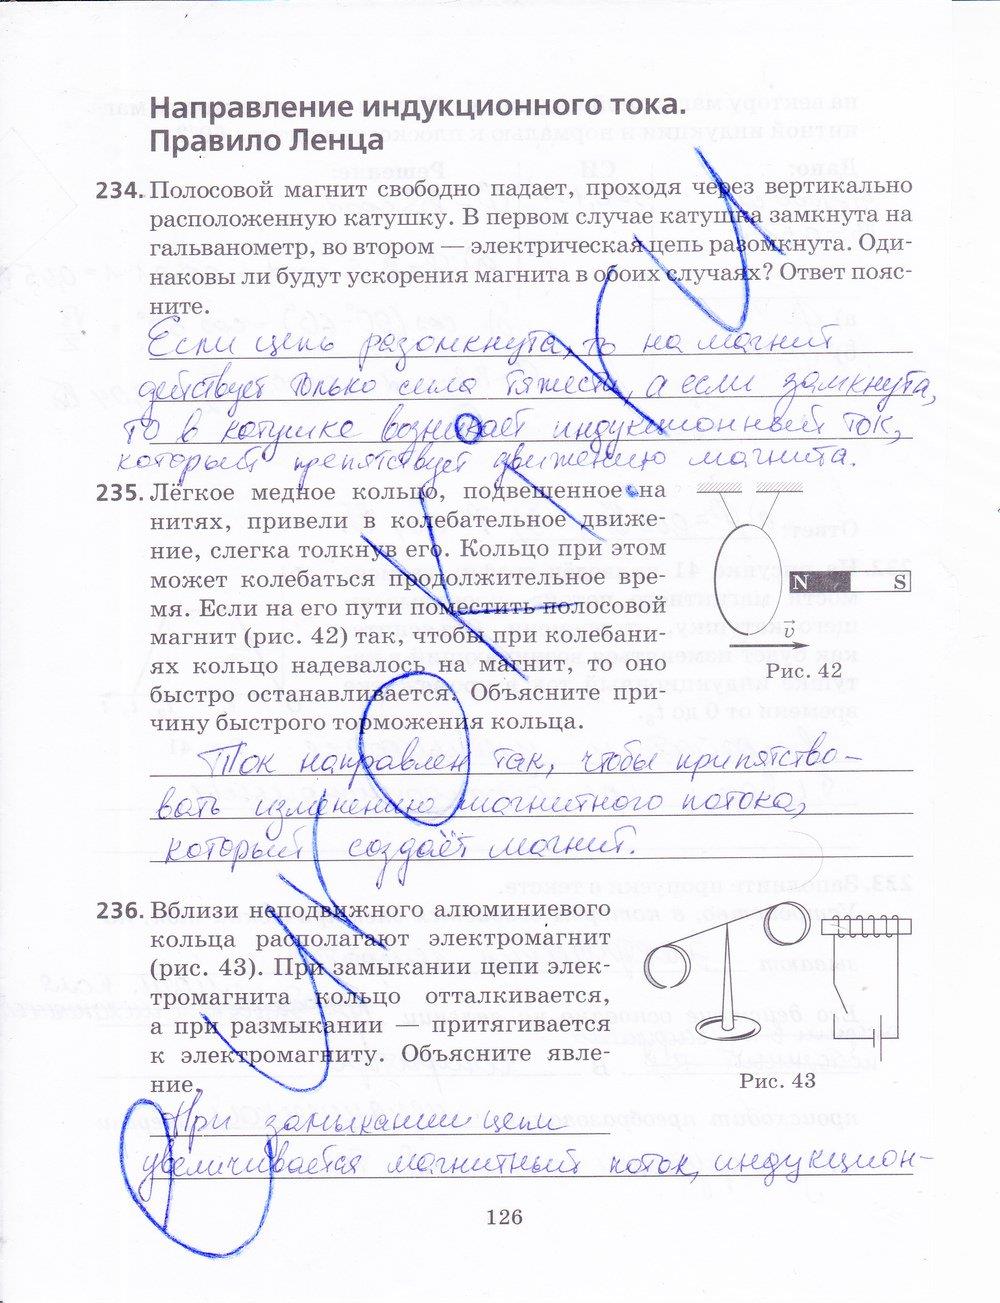 гдз 9 класс рабочая тетрадь страница 126 физика Пурышева, Важеевская, Чаругин